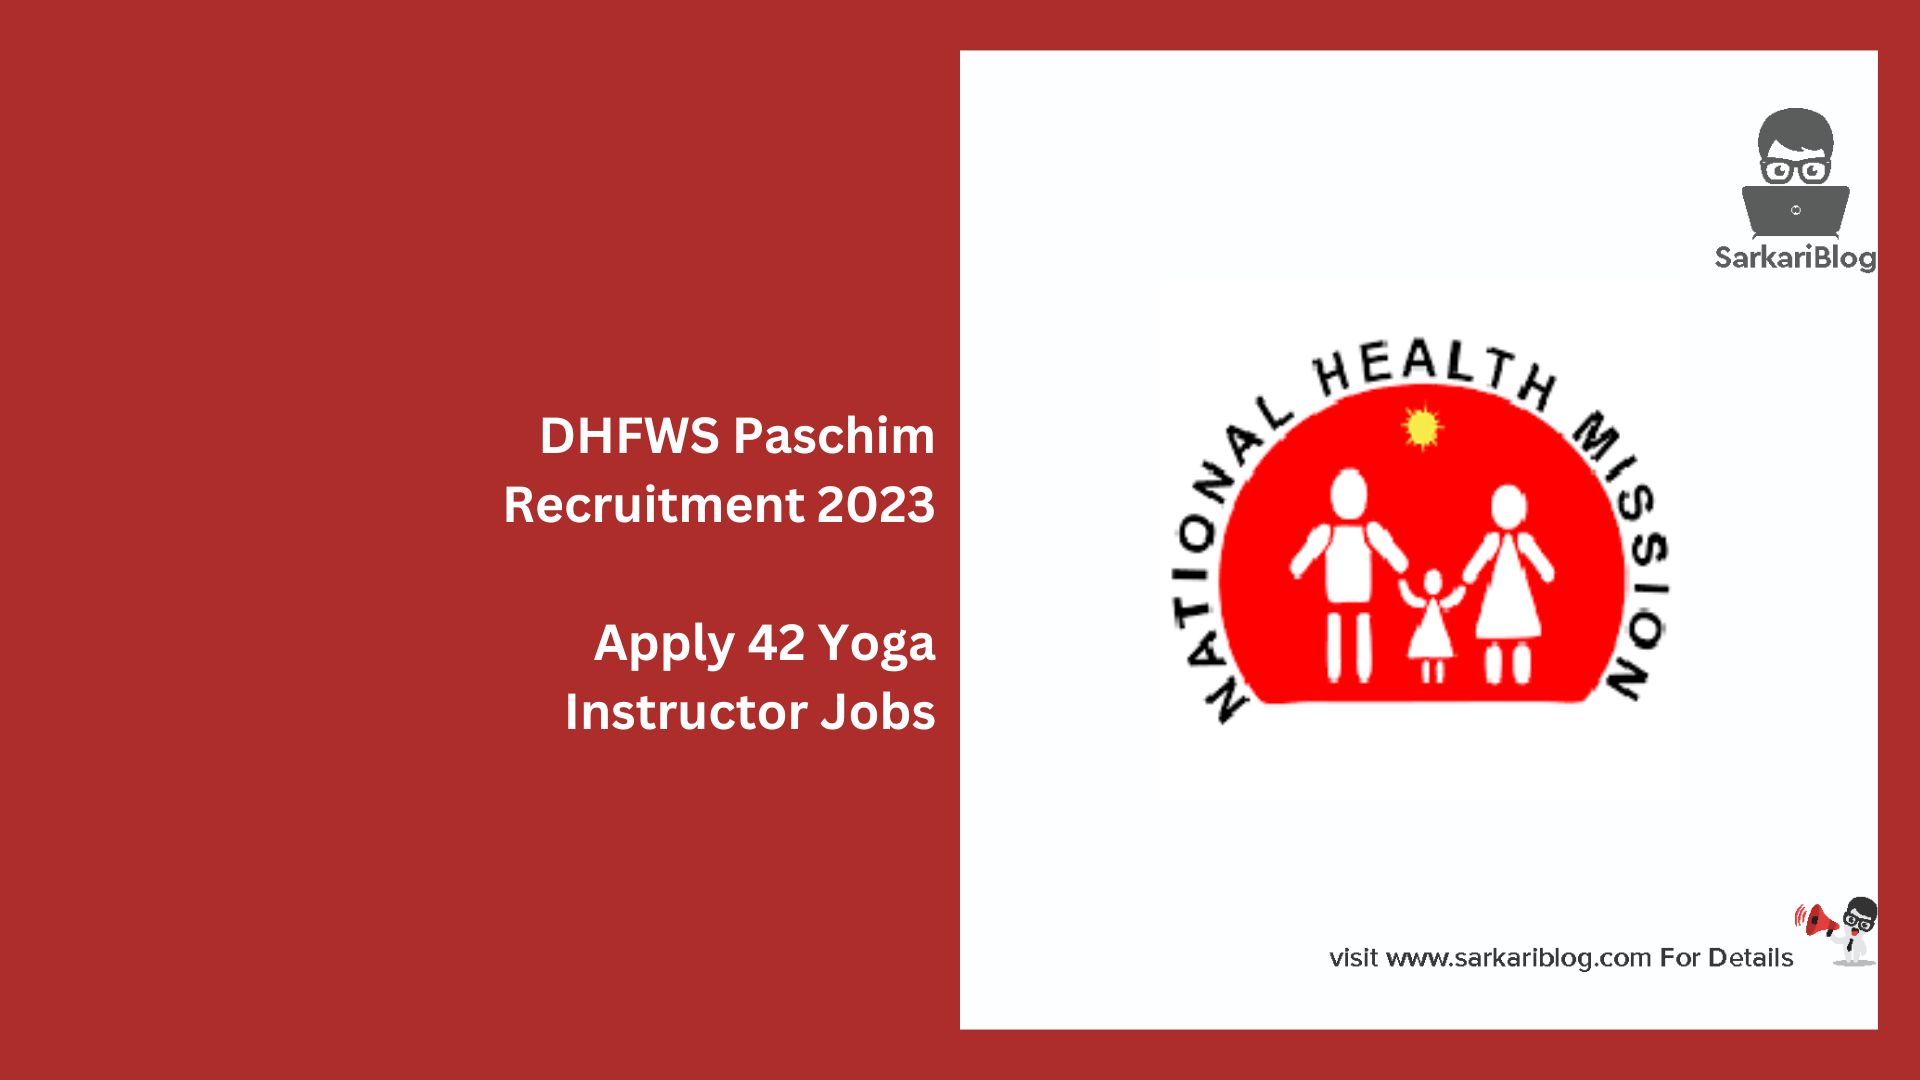 DHFWS Paschim Recruitment 2023